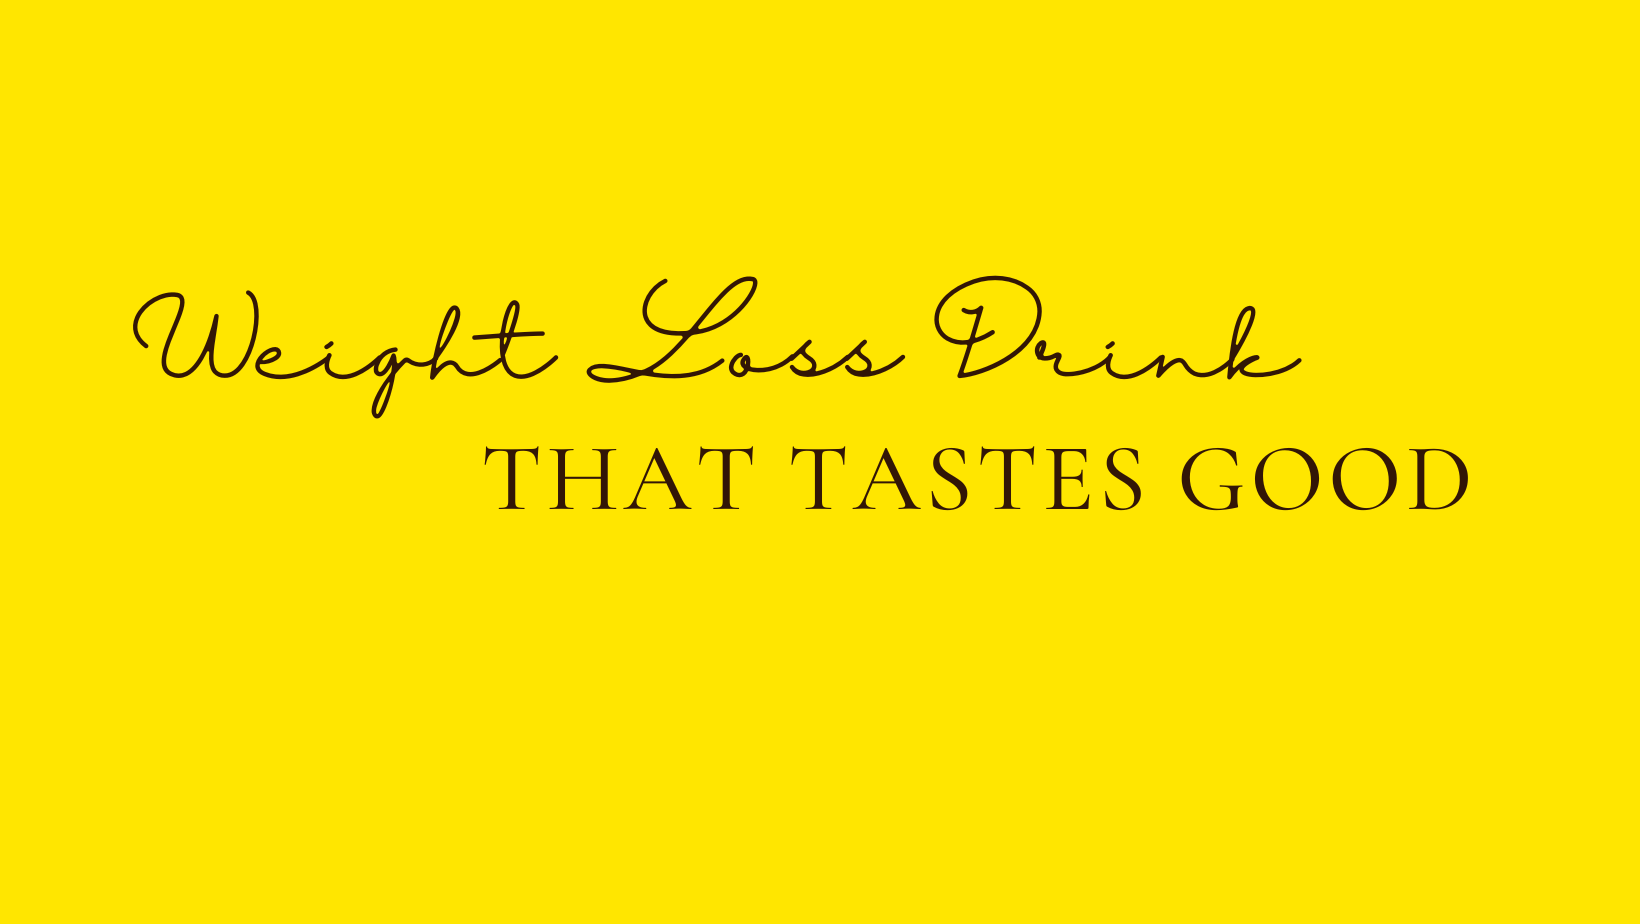 Lemonade Weight Loss Drink That Tastes Good